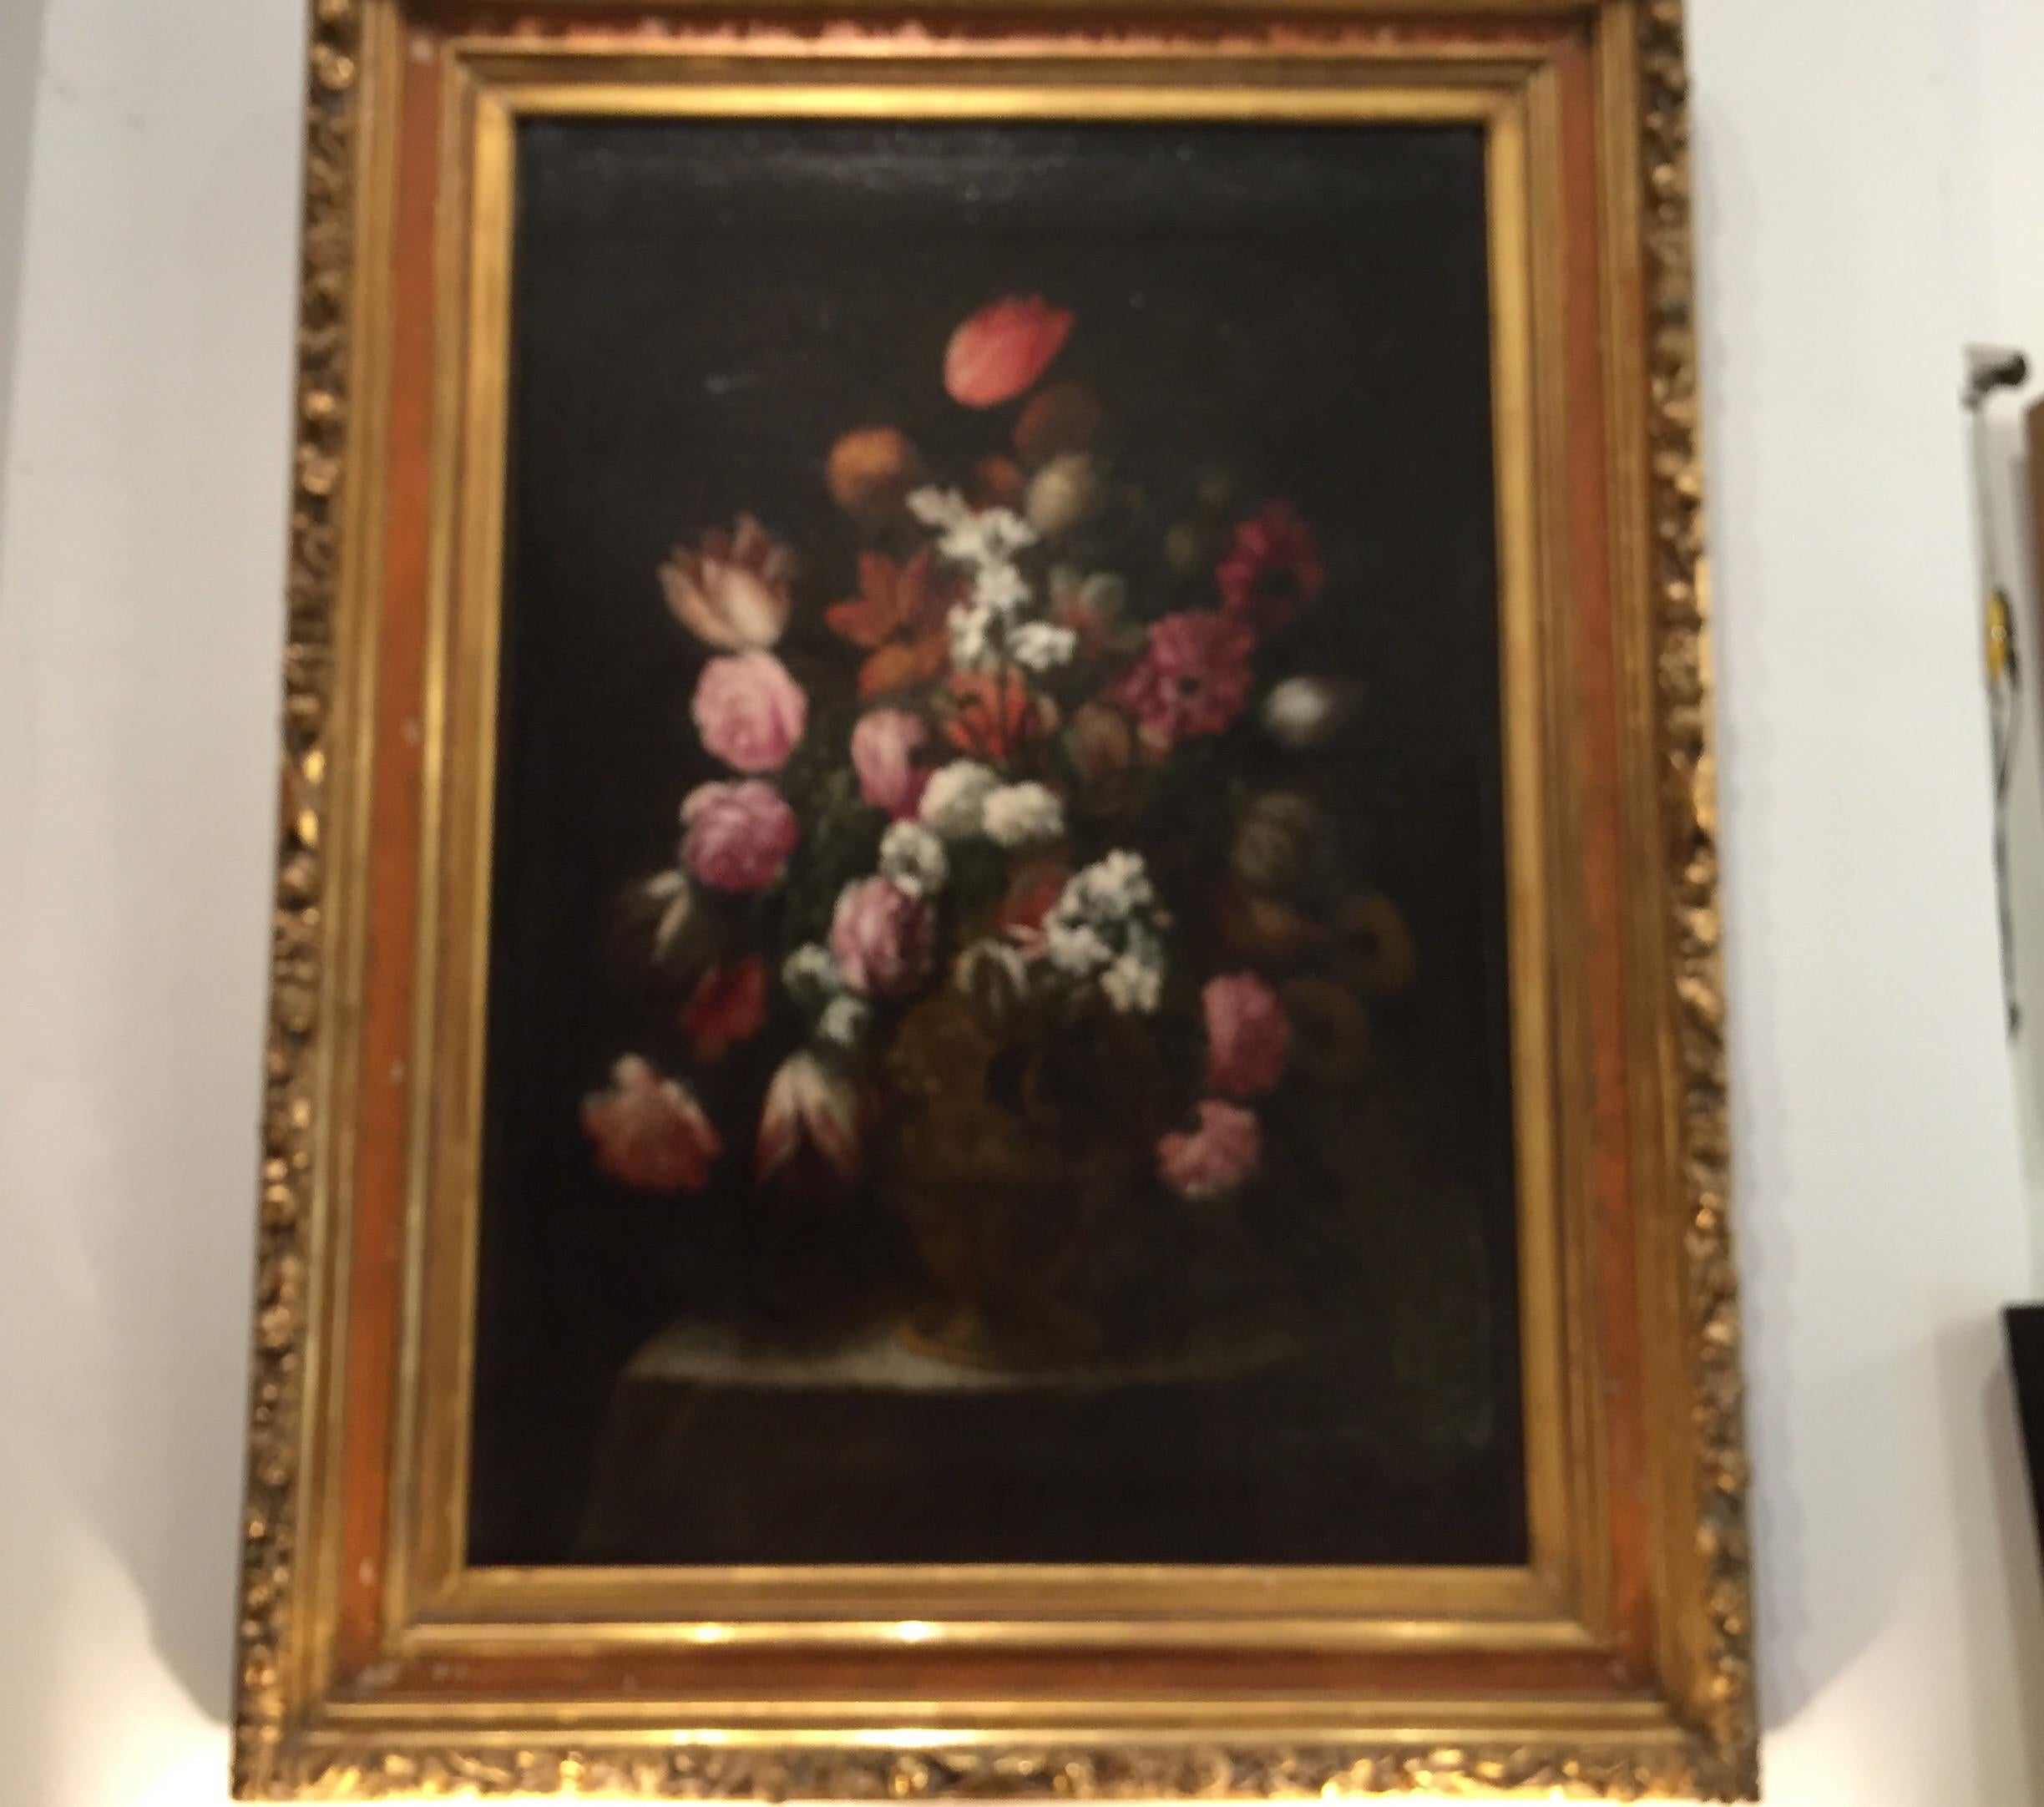  Italian 17th Century Flowers Still Life Lombard School Oil on Canvas Painting 6